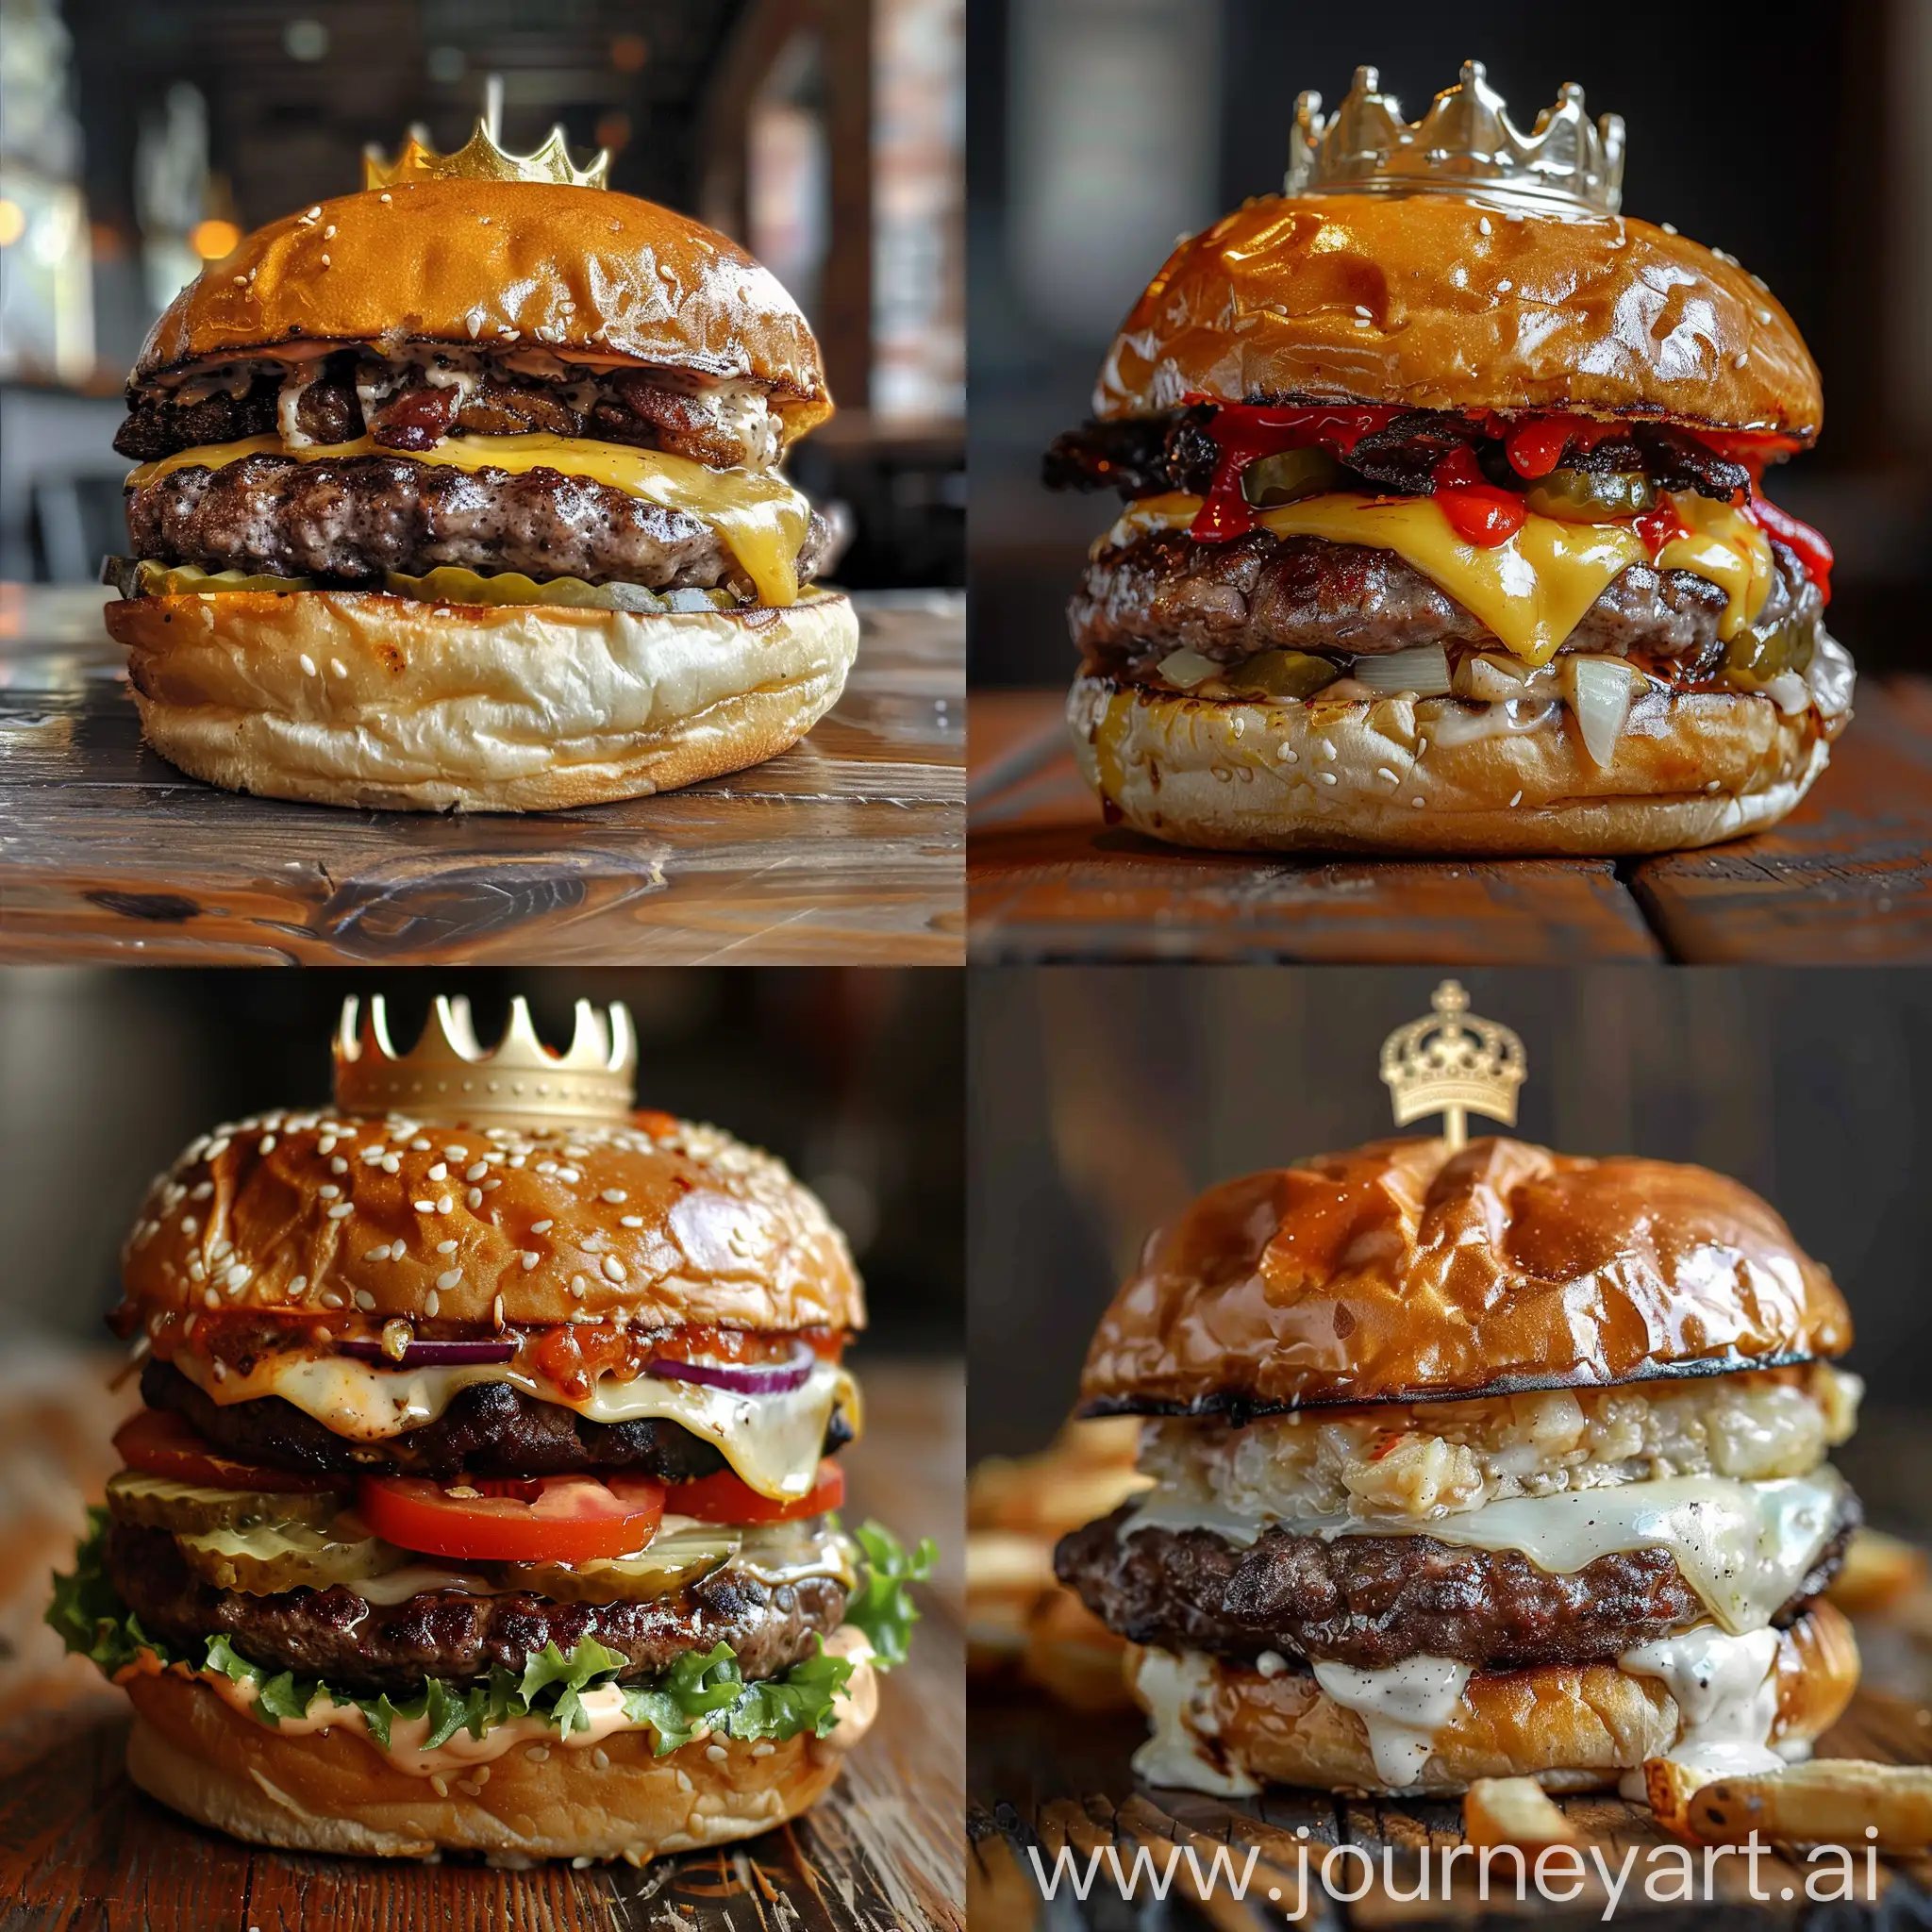 Crown burger